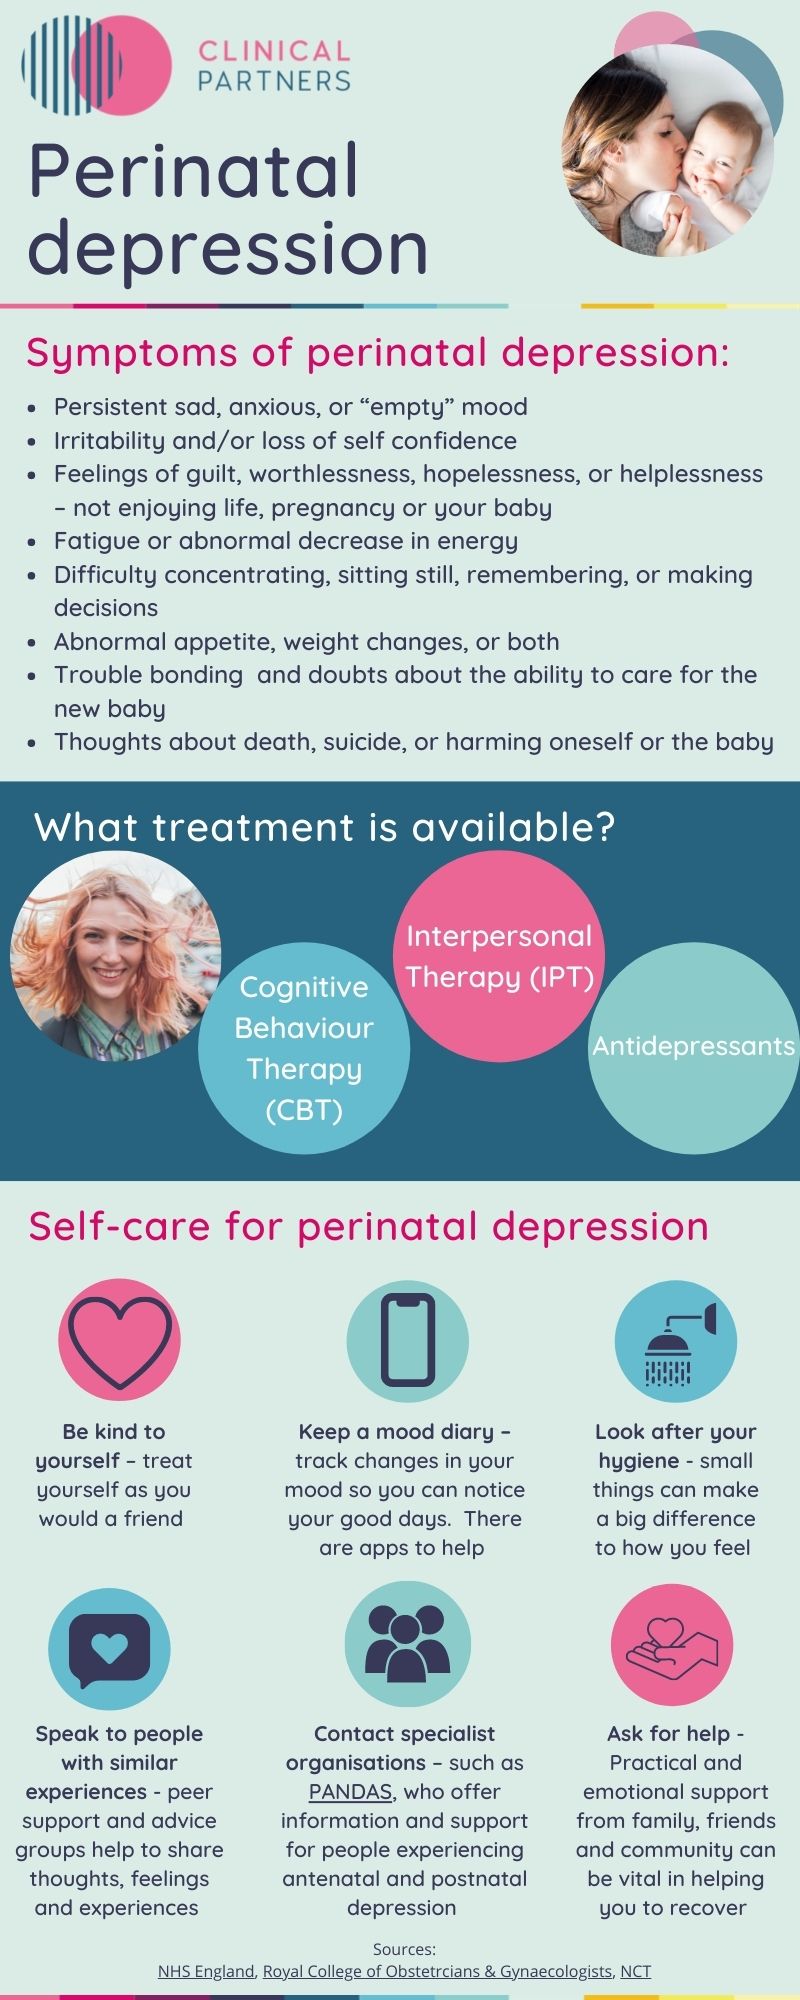 Perinatal depression: symptoms, treatment and self-care tips